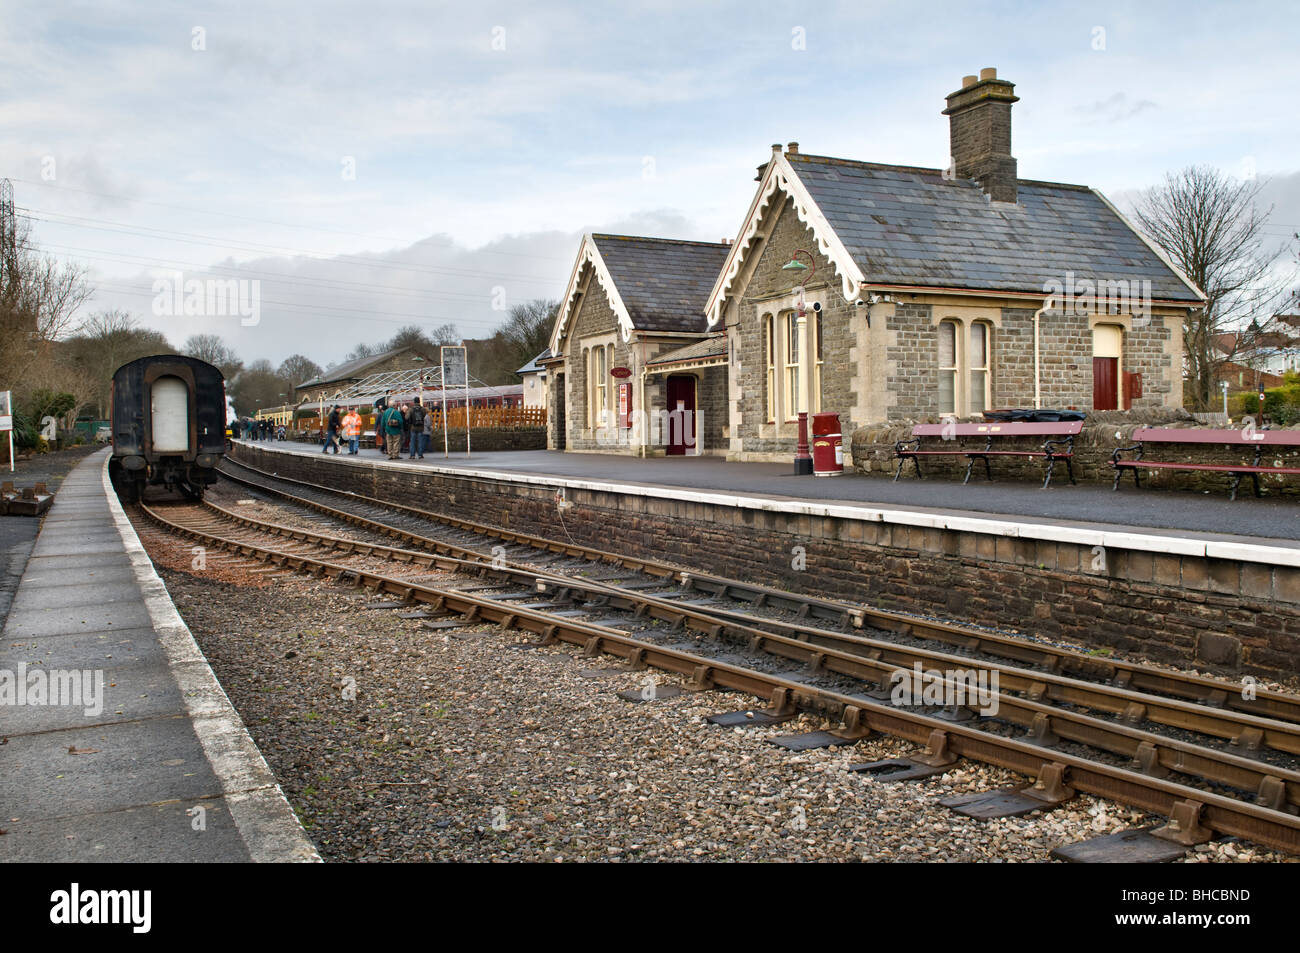 Bitton train station on the Avon Valley railway line with diesel train on tracks Stock Photo